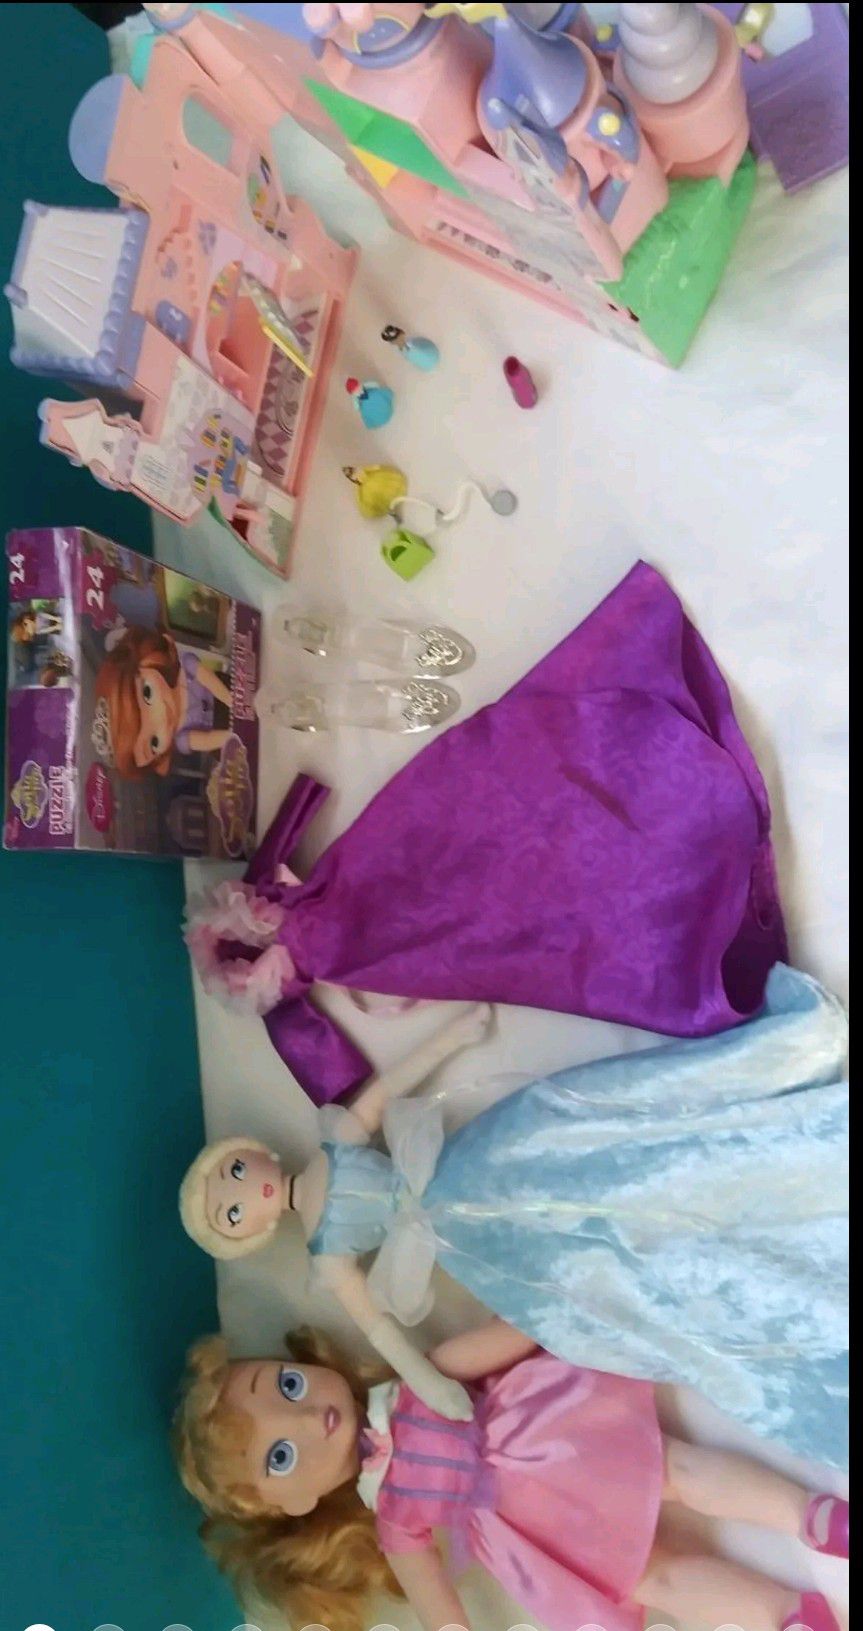  Cinderella's play Castle,
A 14" Plush Cinderella doll,
A Disney doll by Playmates.
 Xtra purple dress
3 Miniature princesses
Cinderella glass slipper